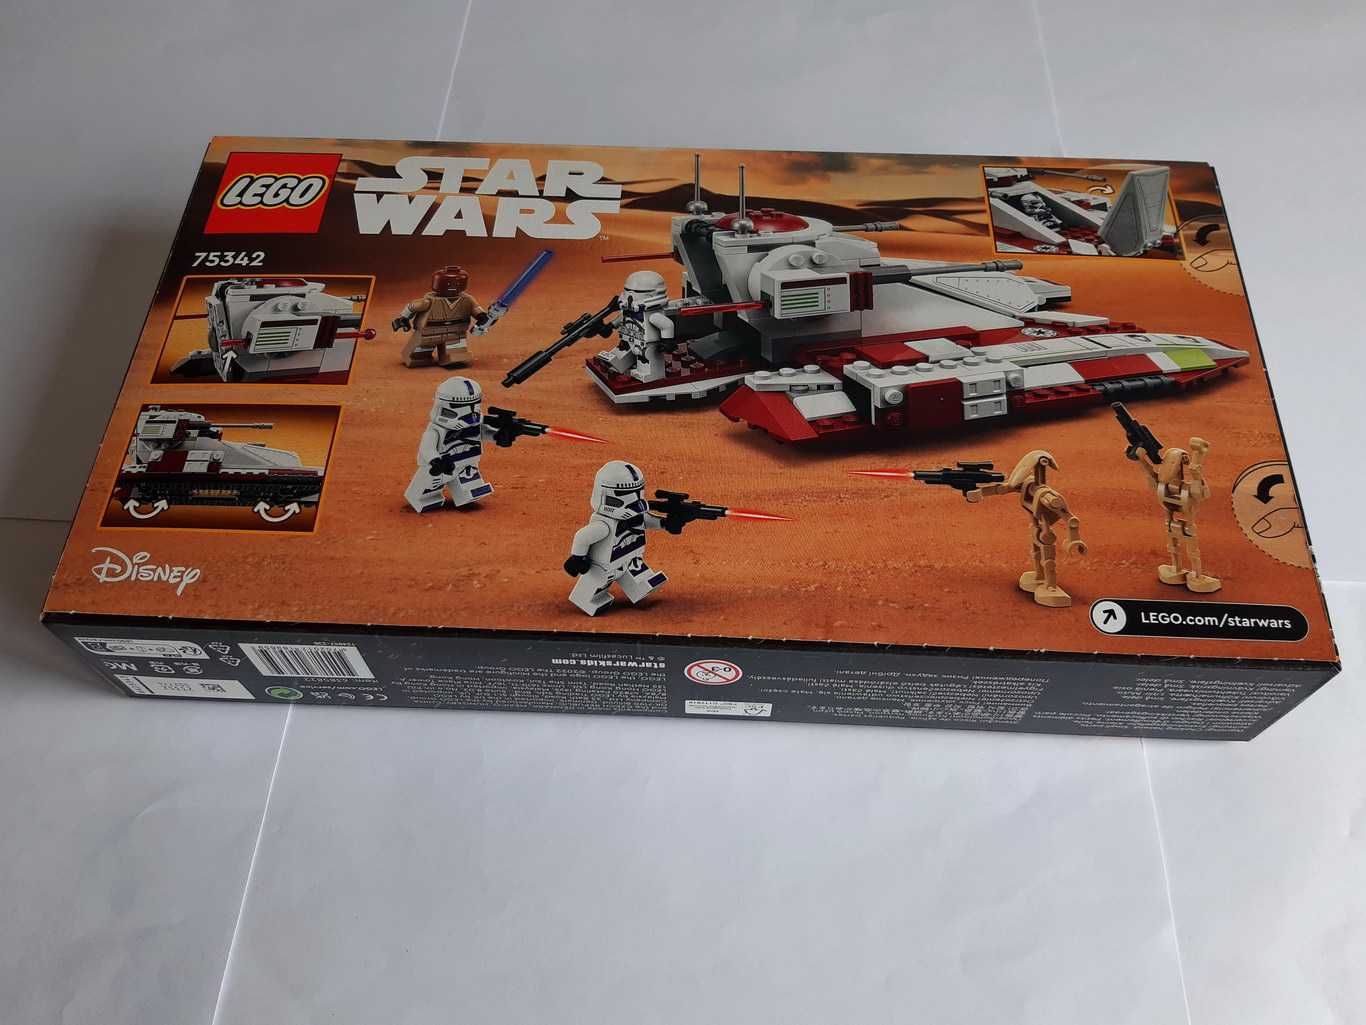 Lego Star Wars 75342 Republic Fighter Tank selado